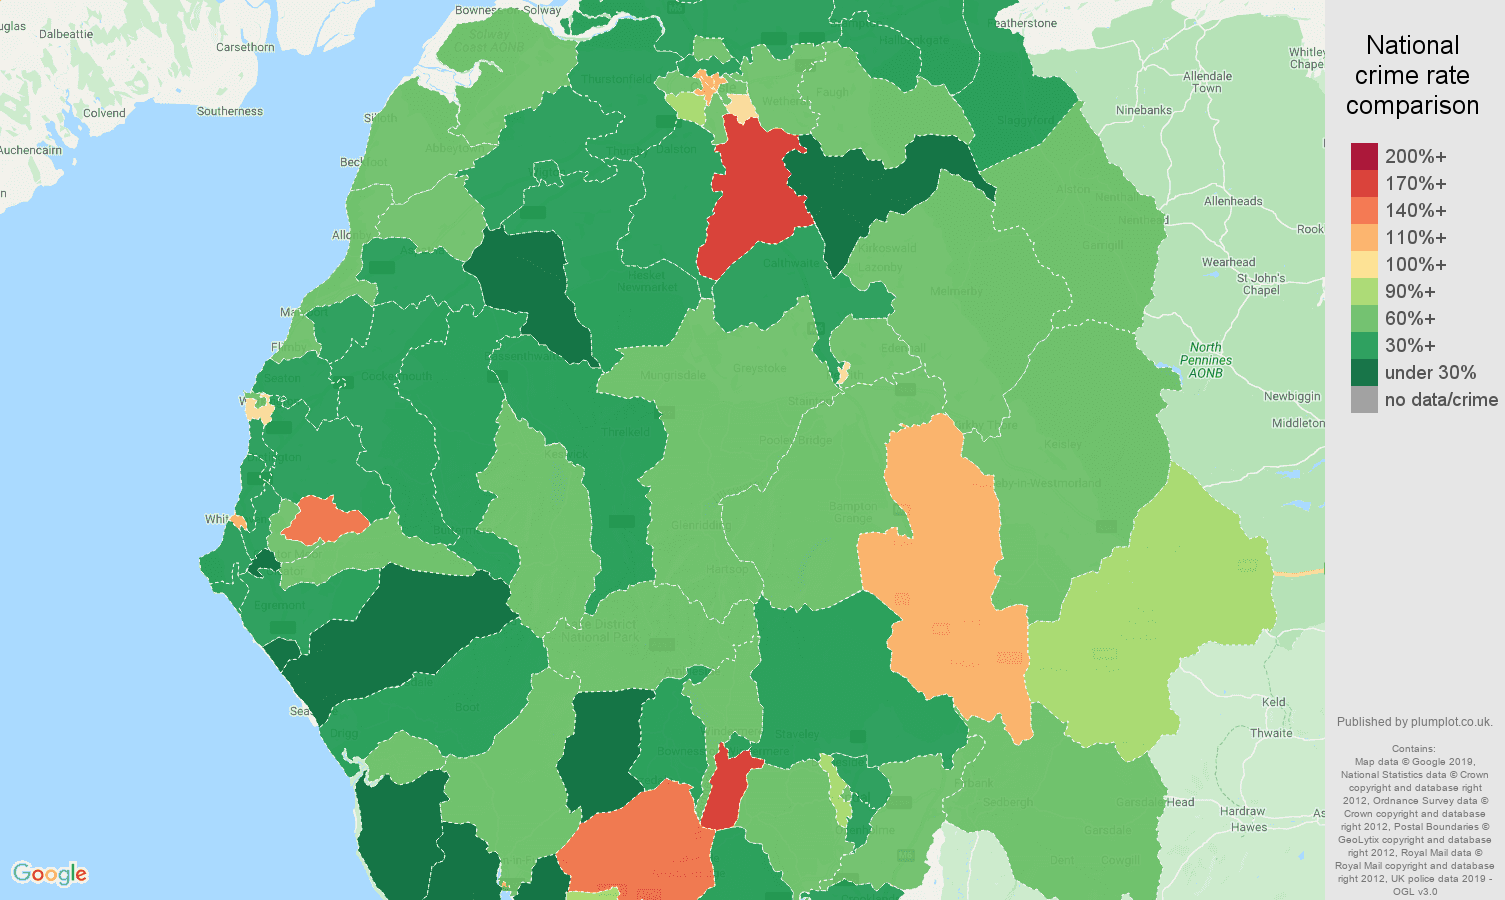 Cumbria other theft crime rate comparison map